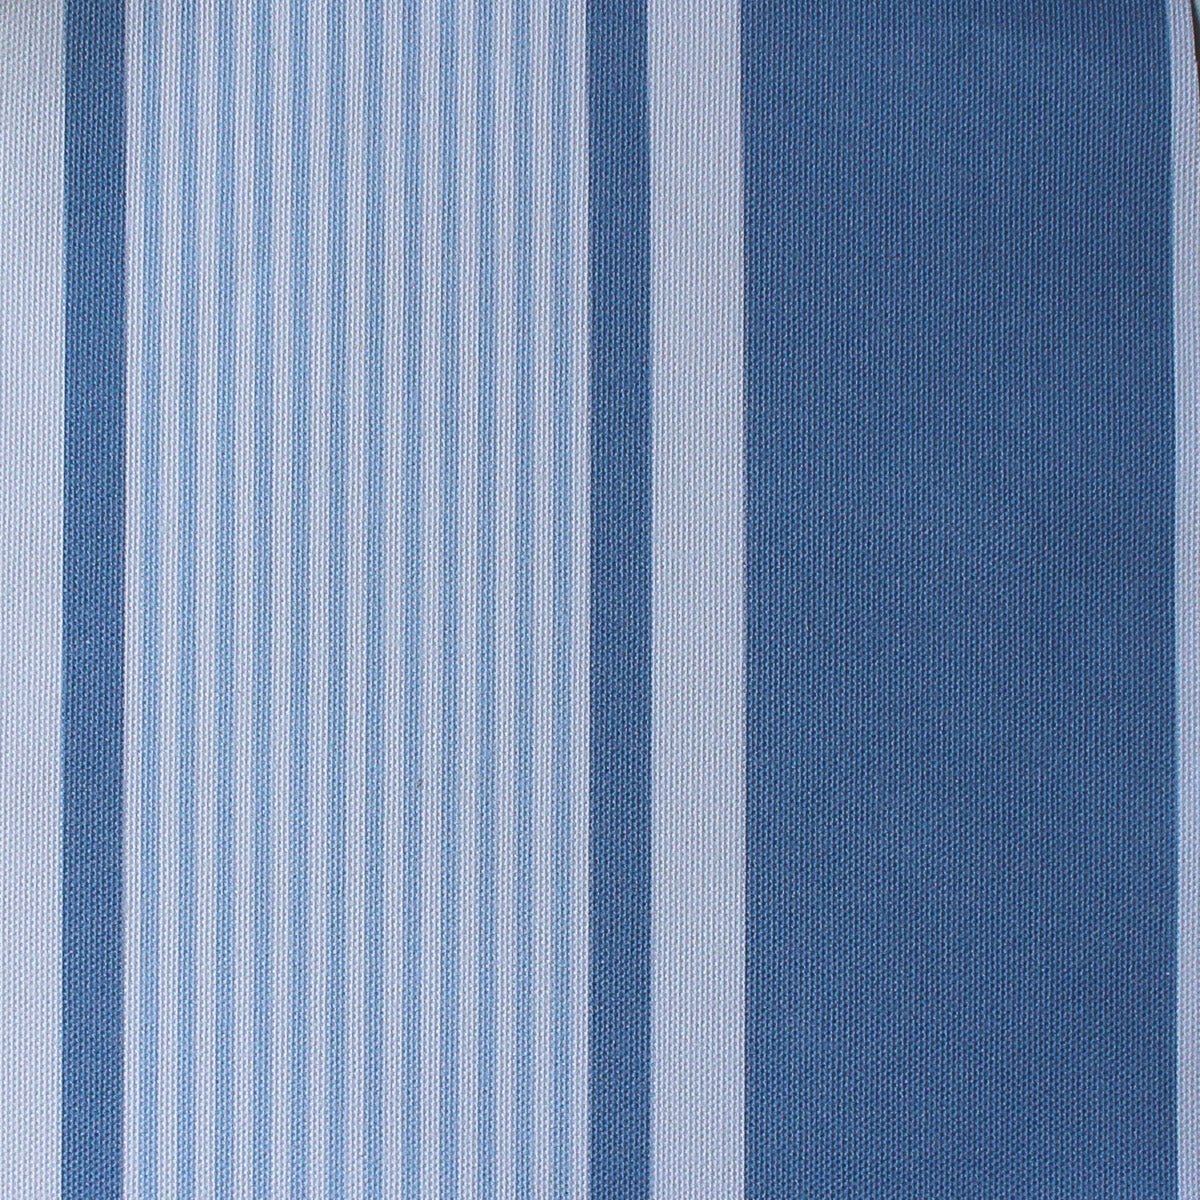 Deckchair Stripe Multi Fabric - Breeze-Serenity - Hydrangea Lane Home